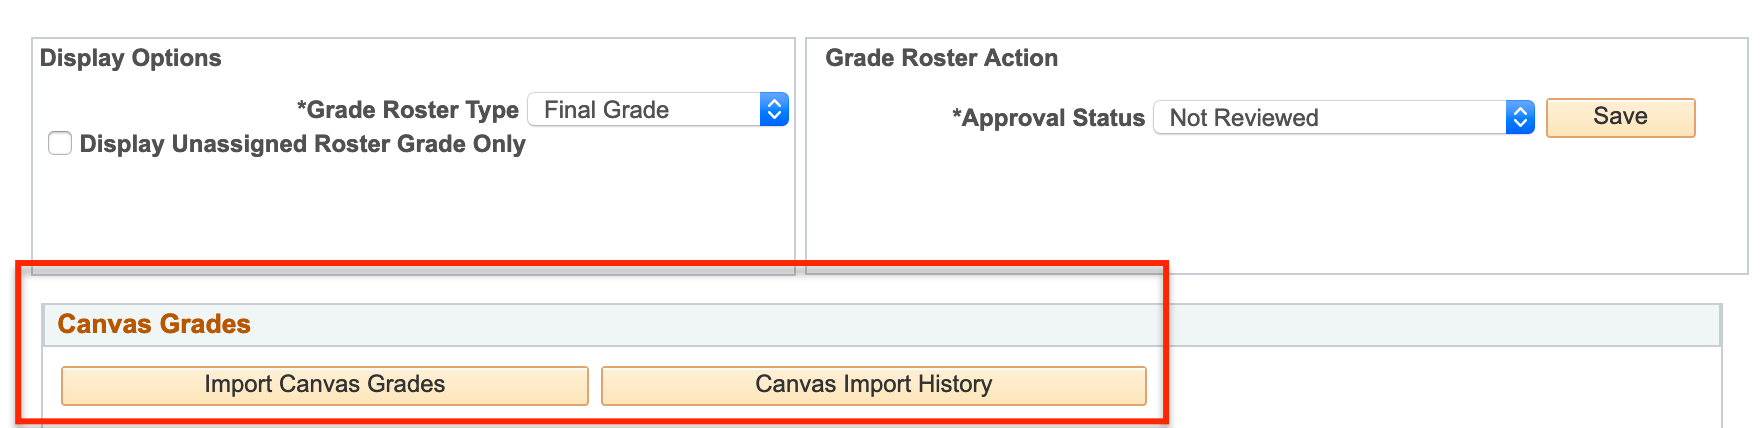 Import Canvas Grades and Canvas Import History screen shot